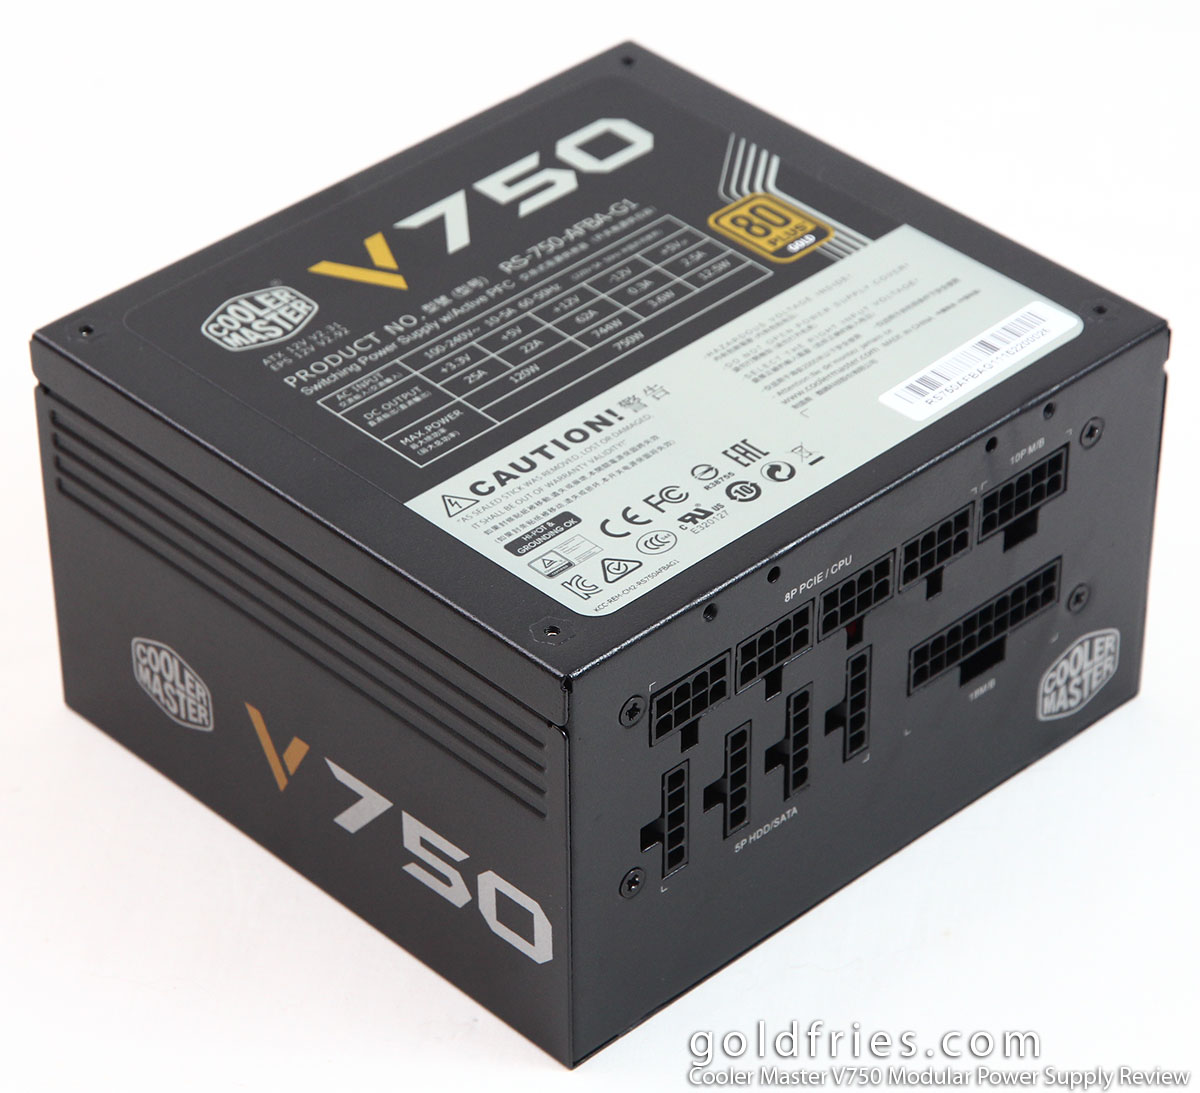 Cooler Master V750 Modular Power Supply Review